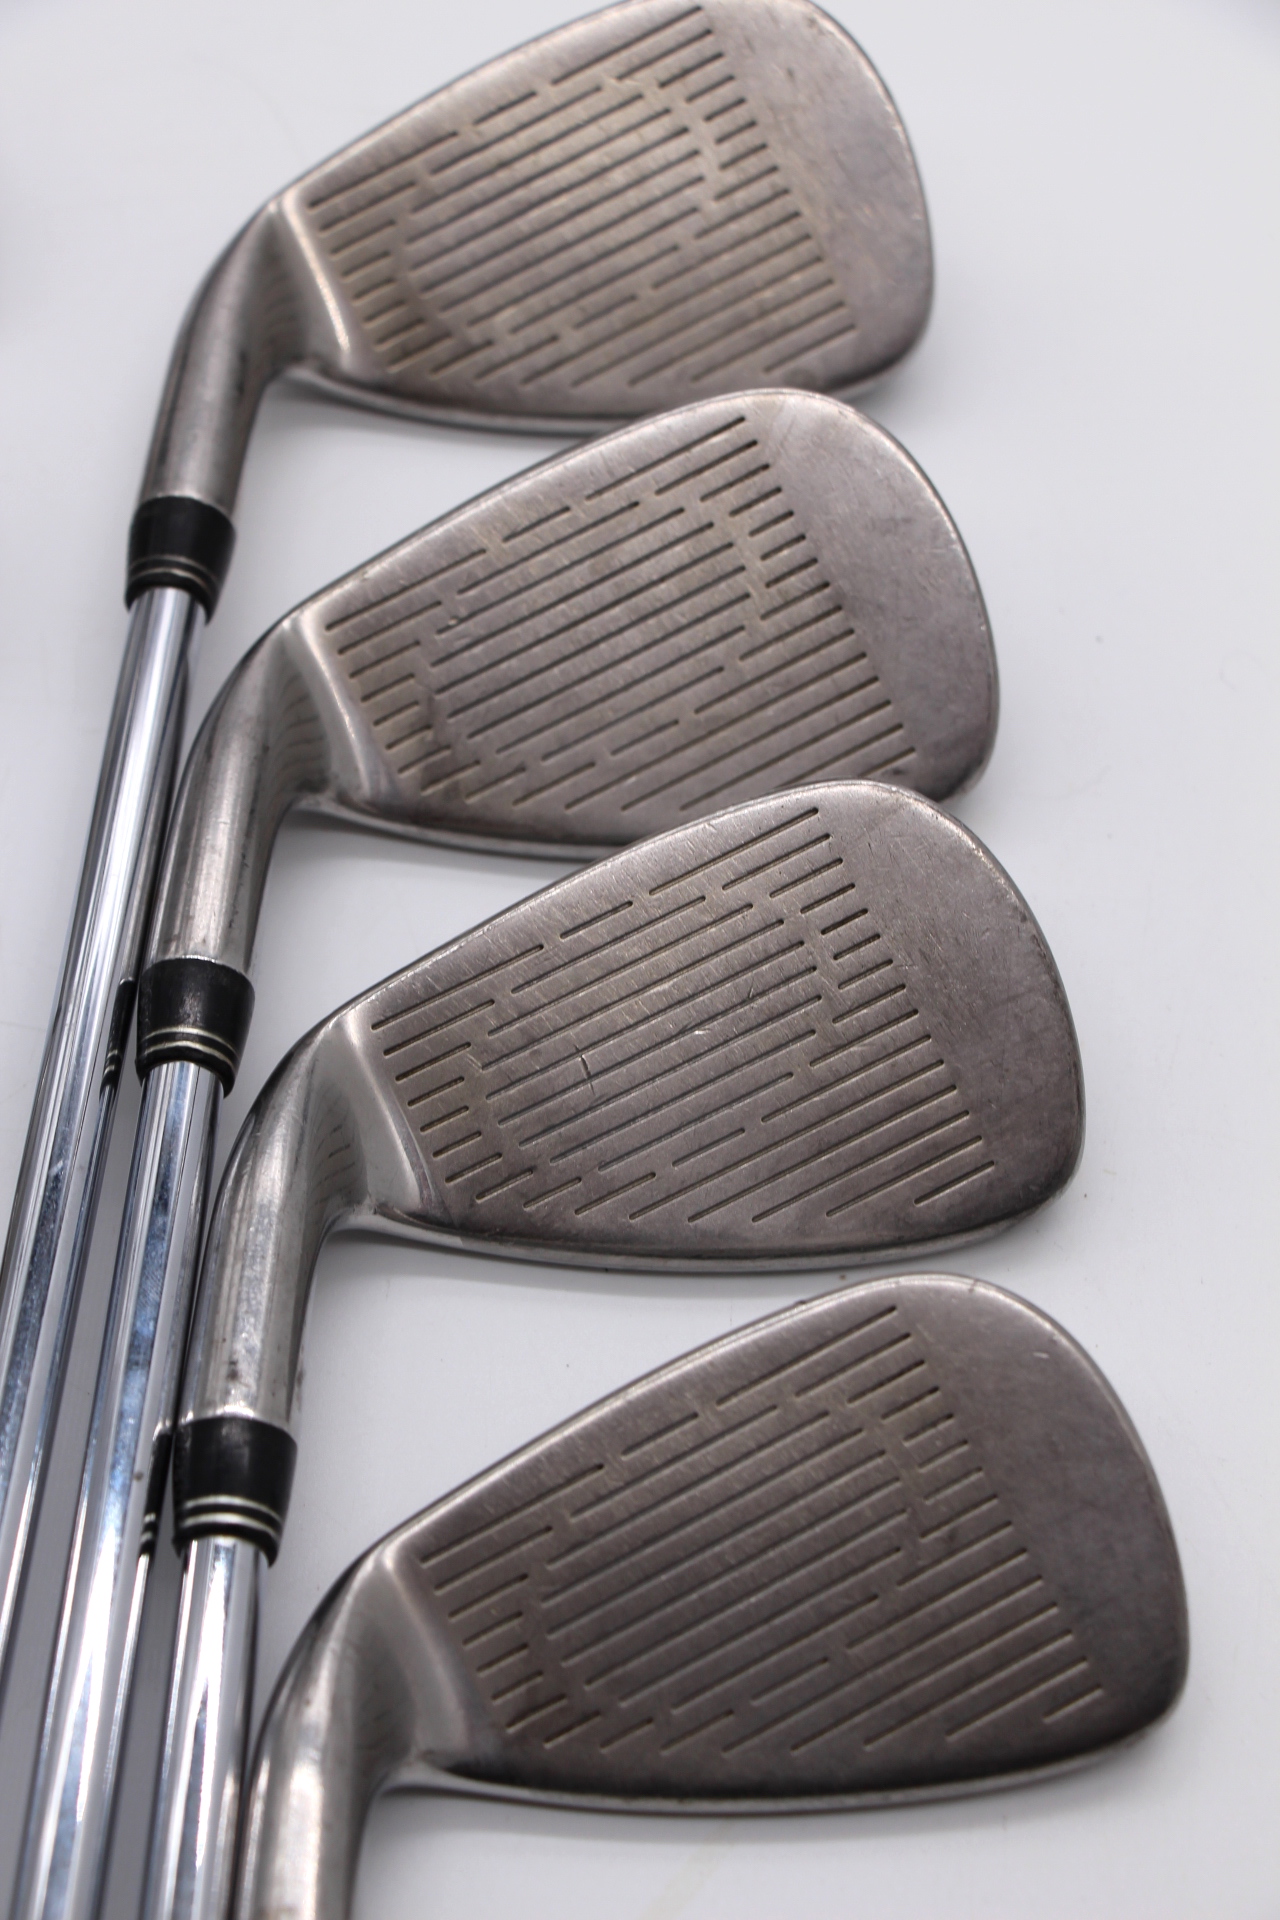 Cobra King SS Oversize Irons - Golf Geeks